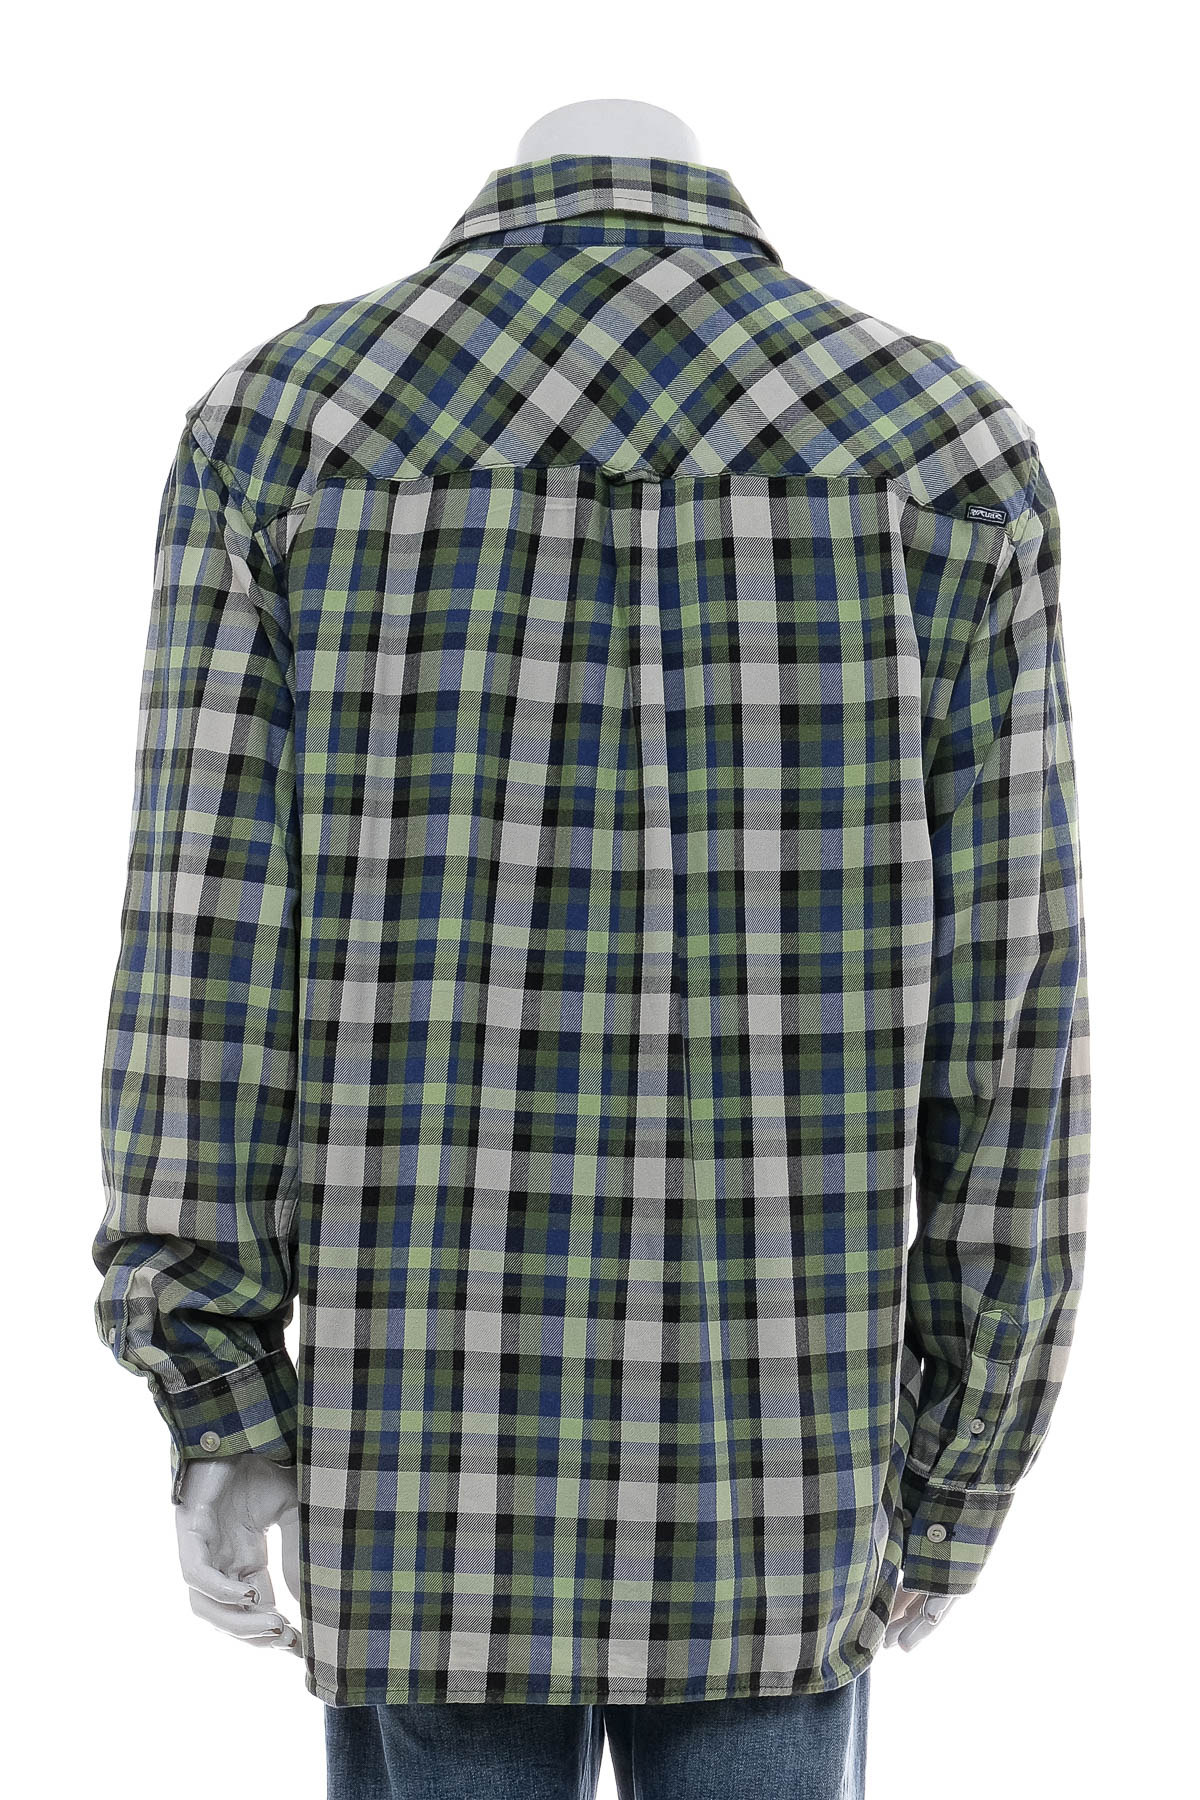 Men's shirt - RIPCURL - 1